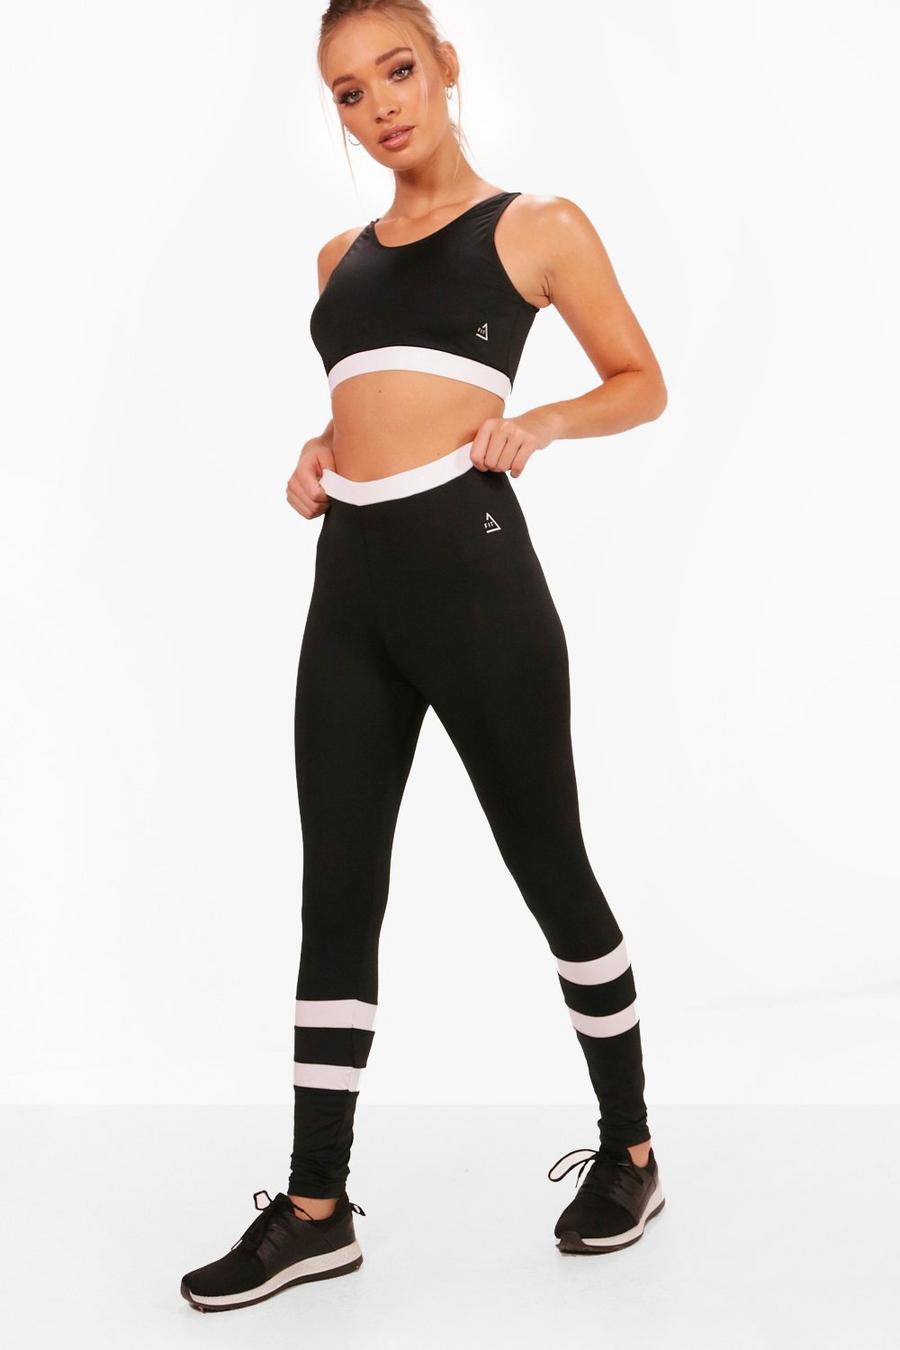 https://media.boohoo.com/i/boohoo/dzz33876_black_xl/female-black-fit-high-waisted-legging-&-sports-bra-set/?w=900&qlt=default&fmt.jp2.qlt=70&fmt=auto&sm=fit